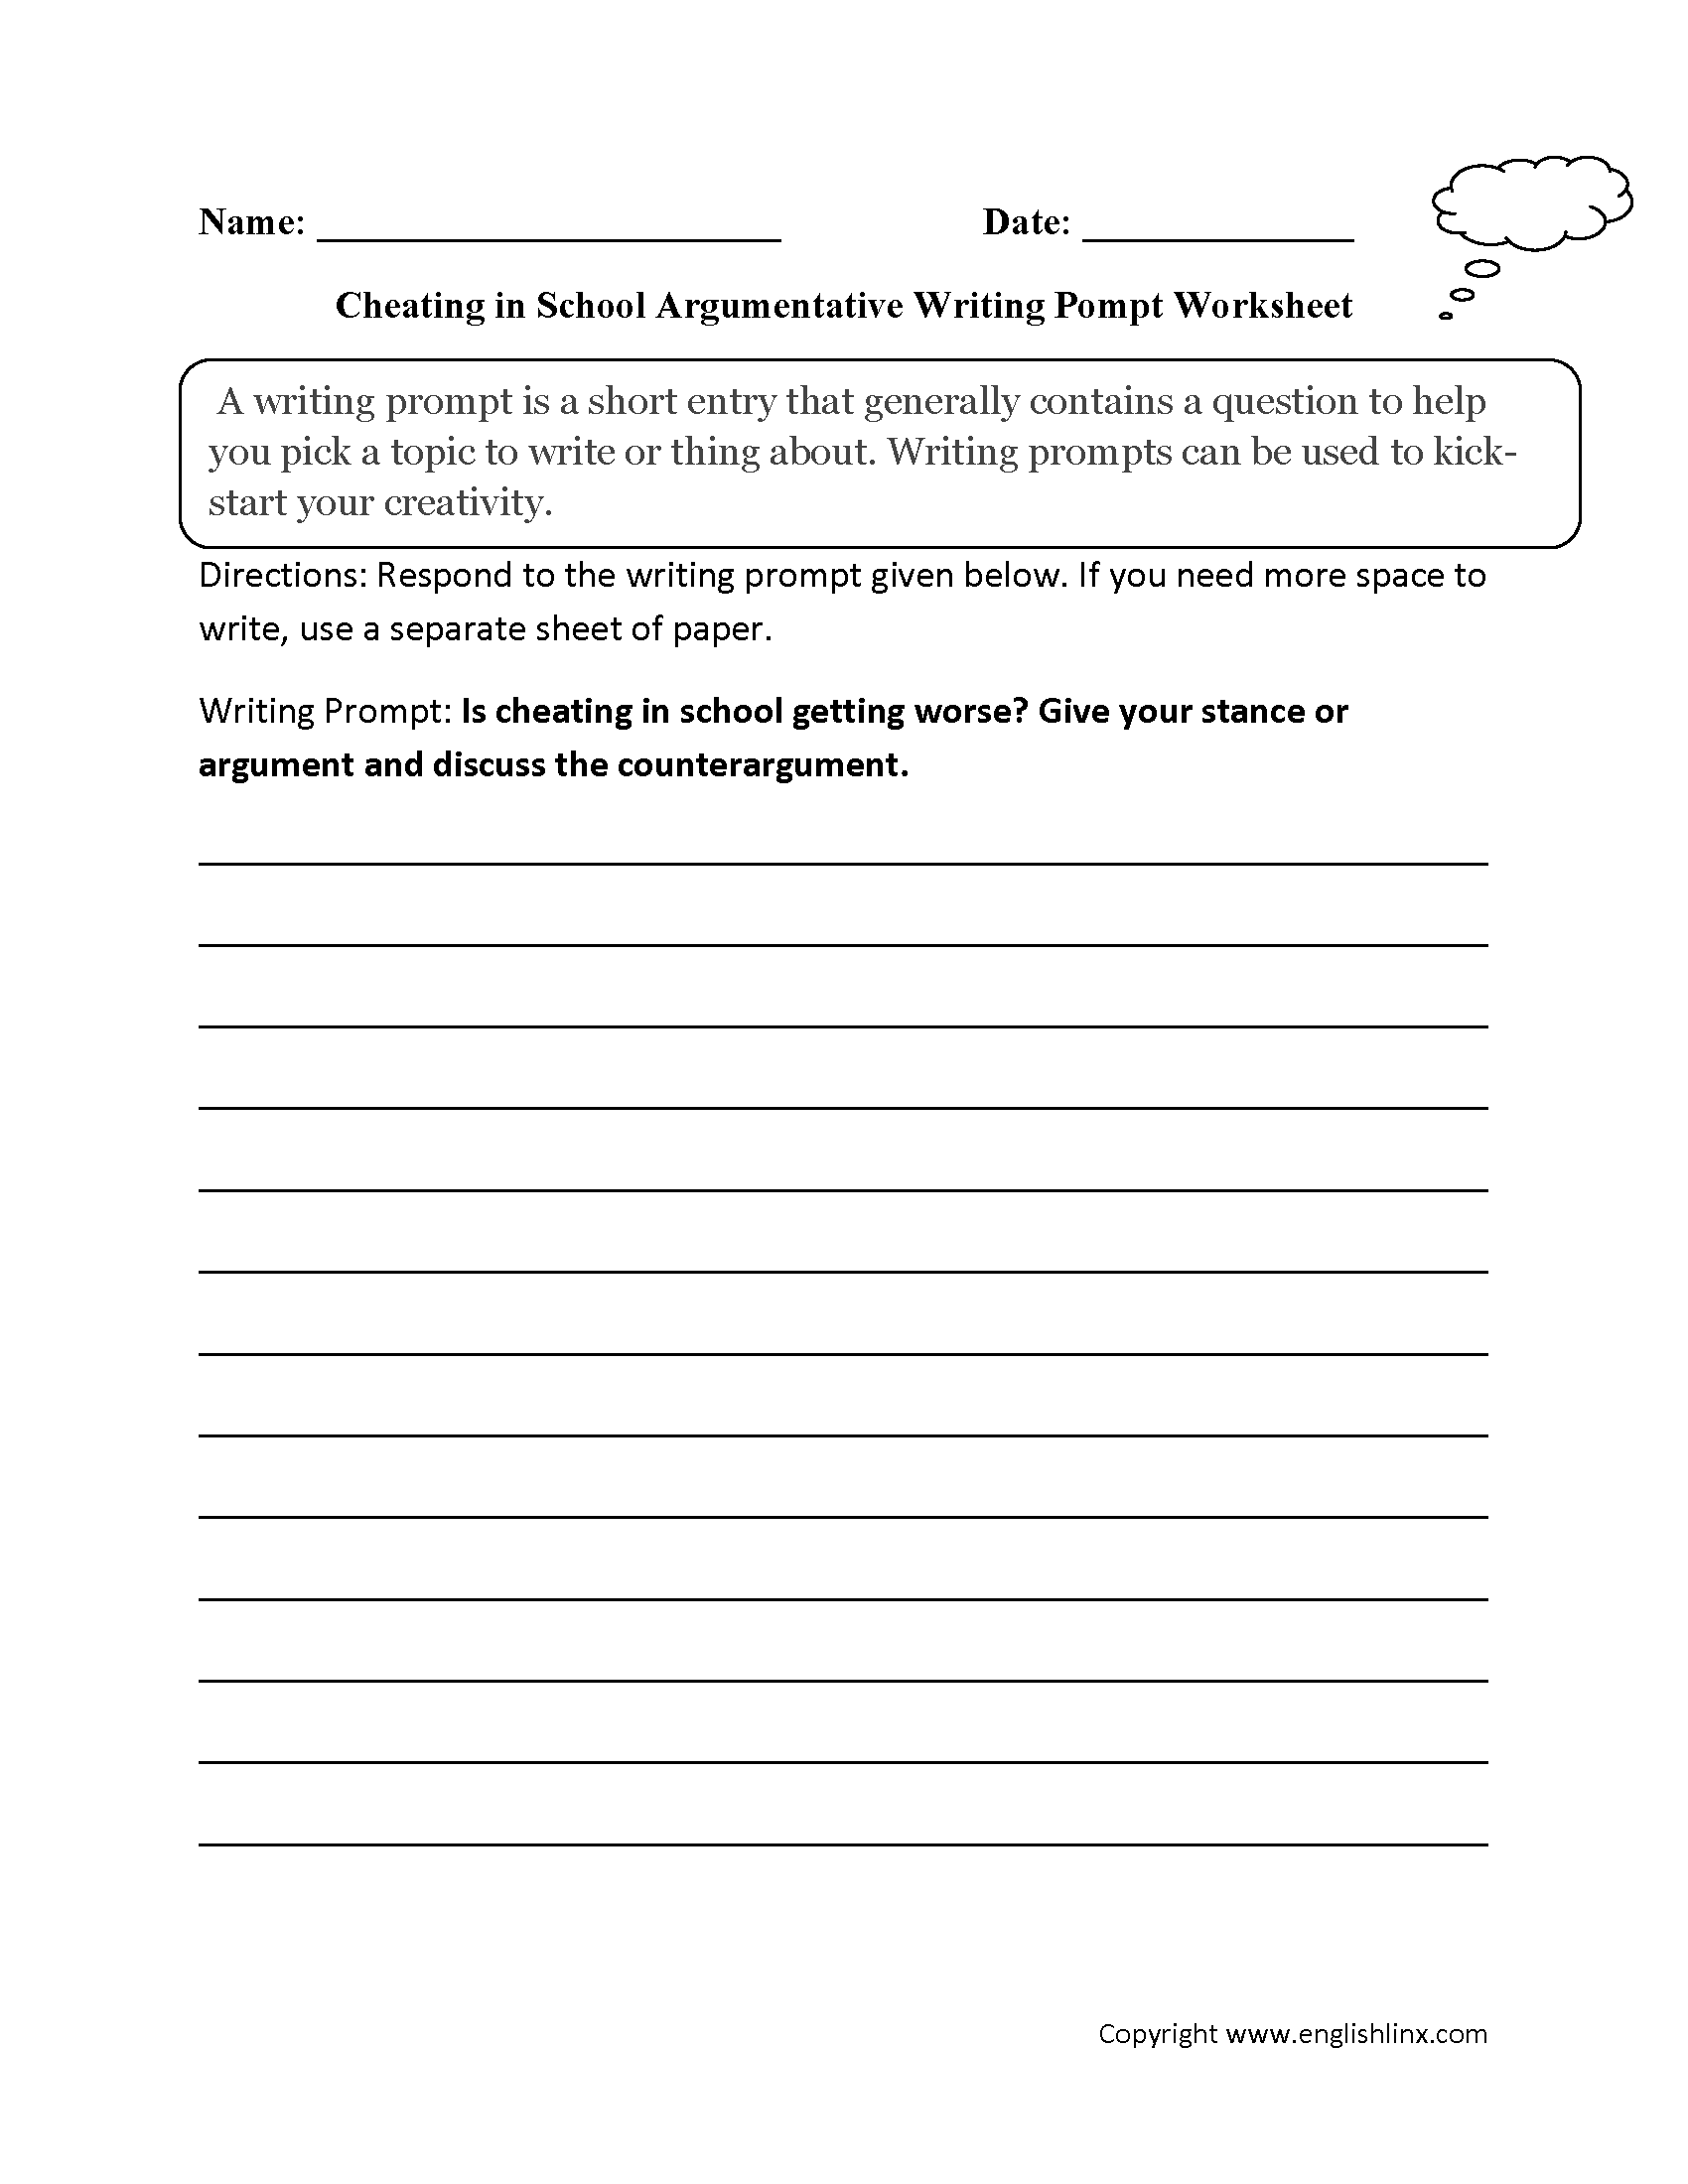 School Cheating Argumentative Writing Prompt Worksheet